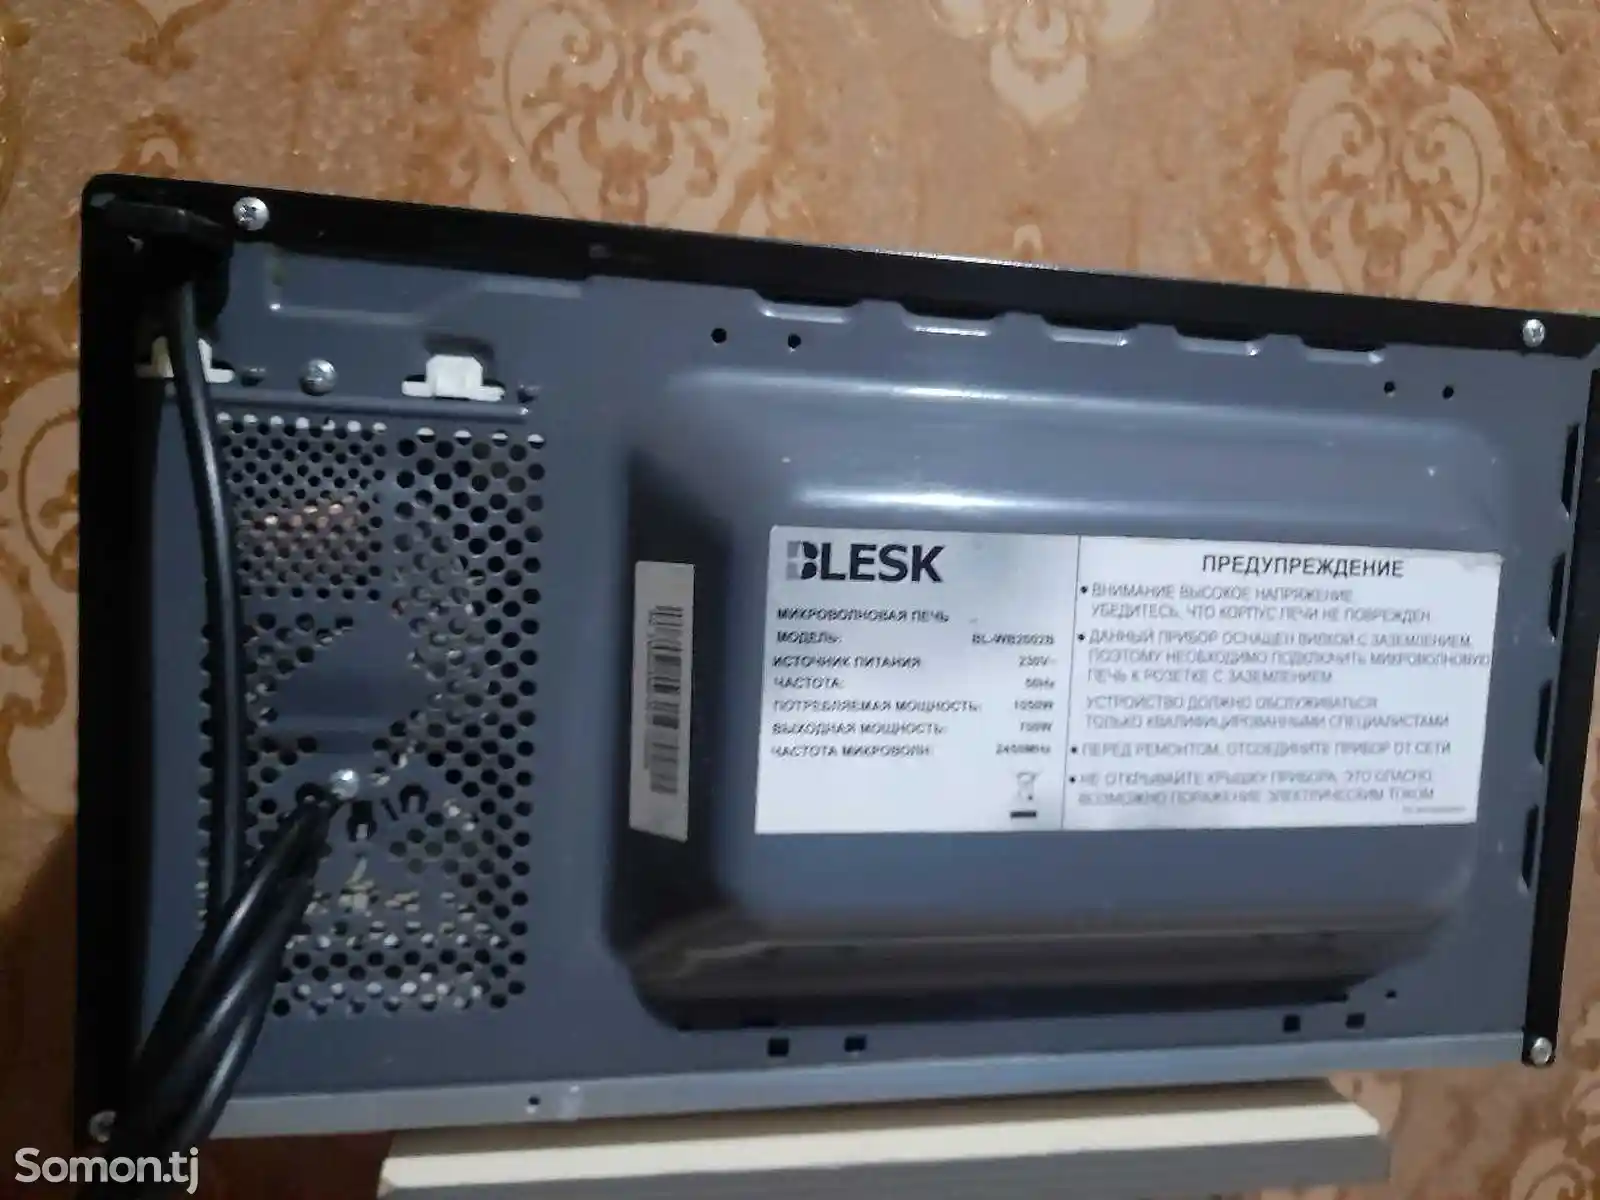 Mикроволновая печь Blesk-3